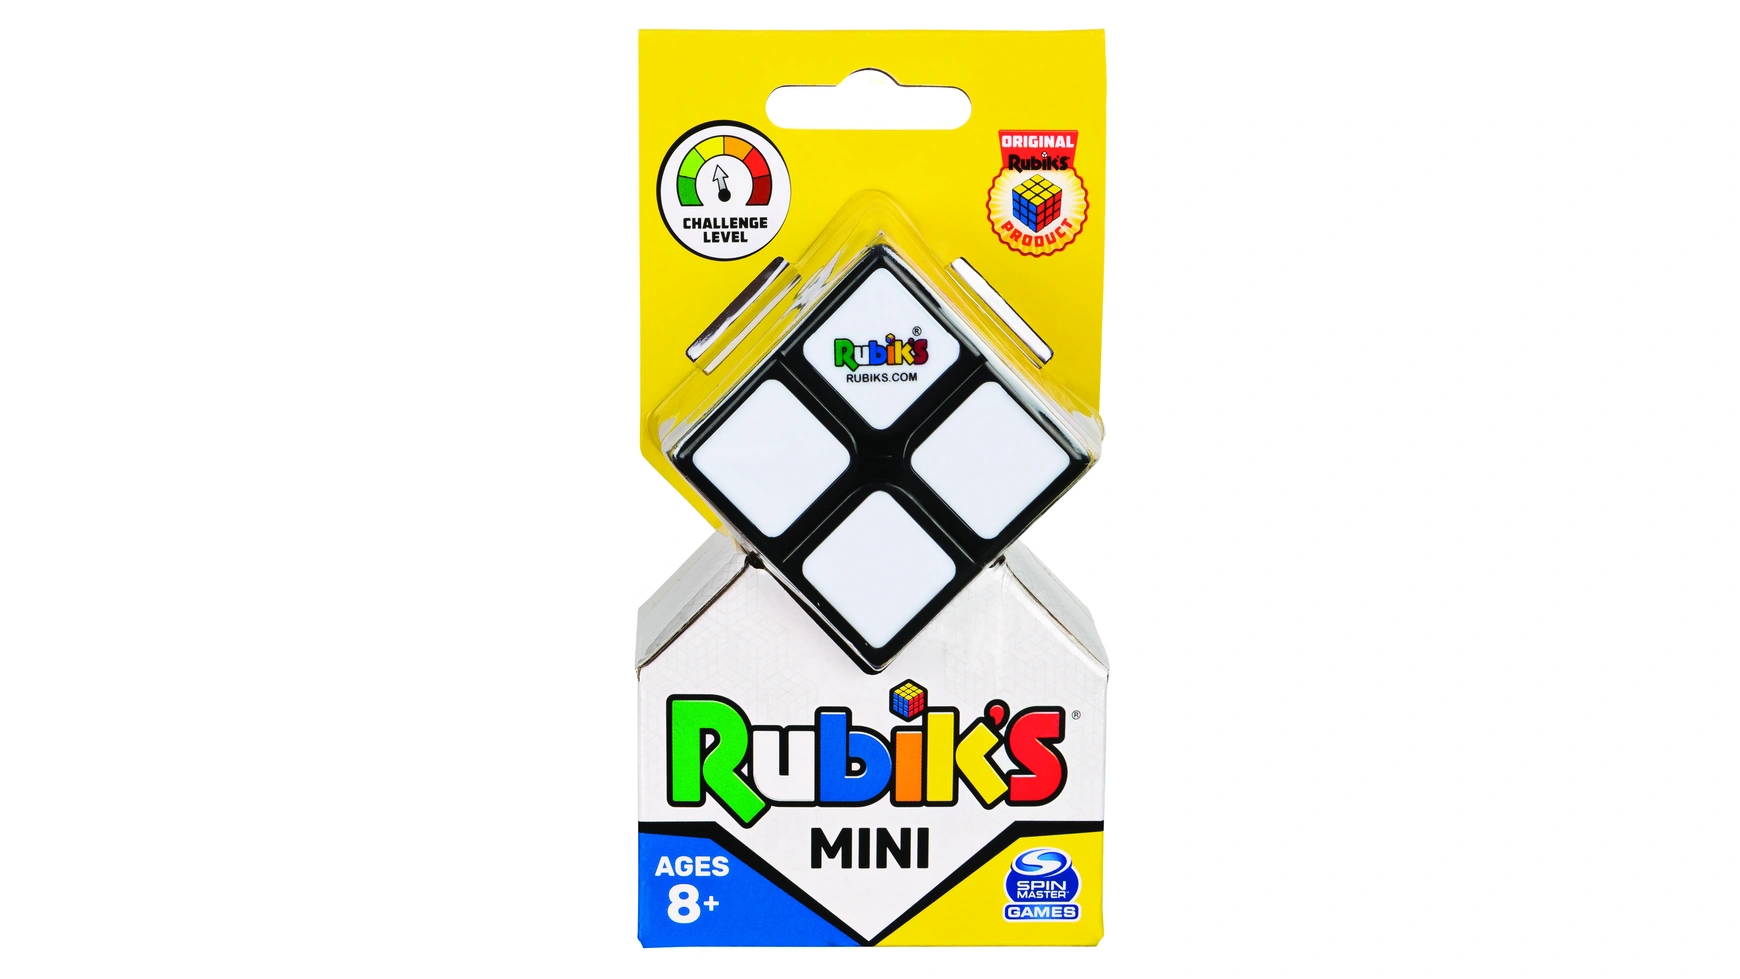 Rubik's Mini 2x2 Кубик Рубика кубик 2x2 для начинающих от 8 лет и для путешествий Spin Master